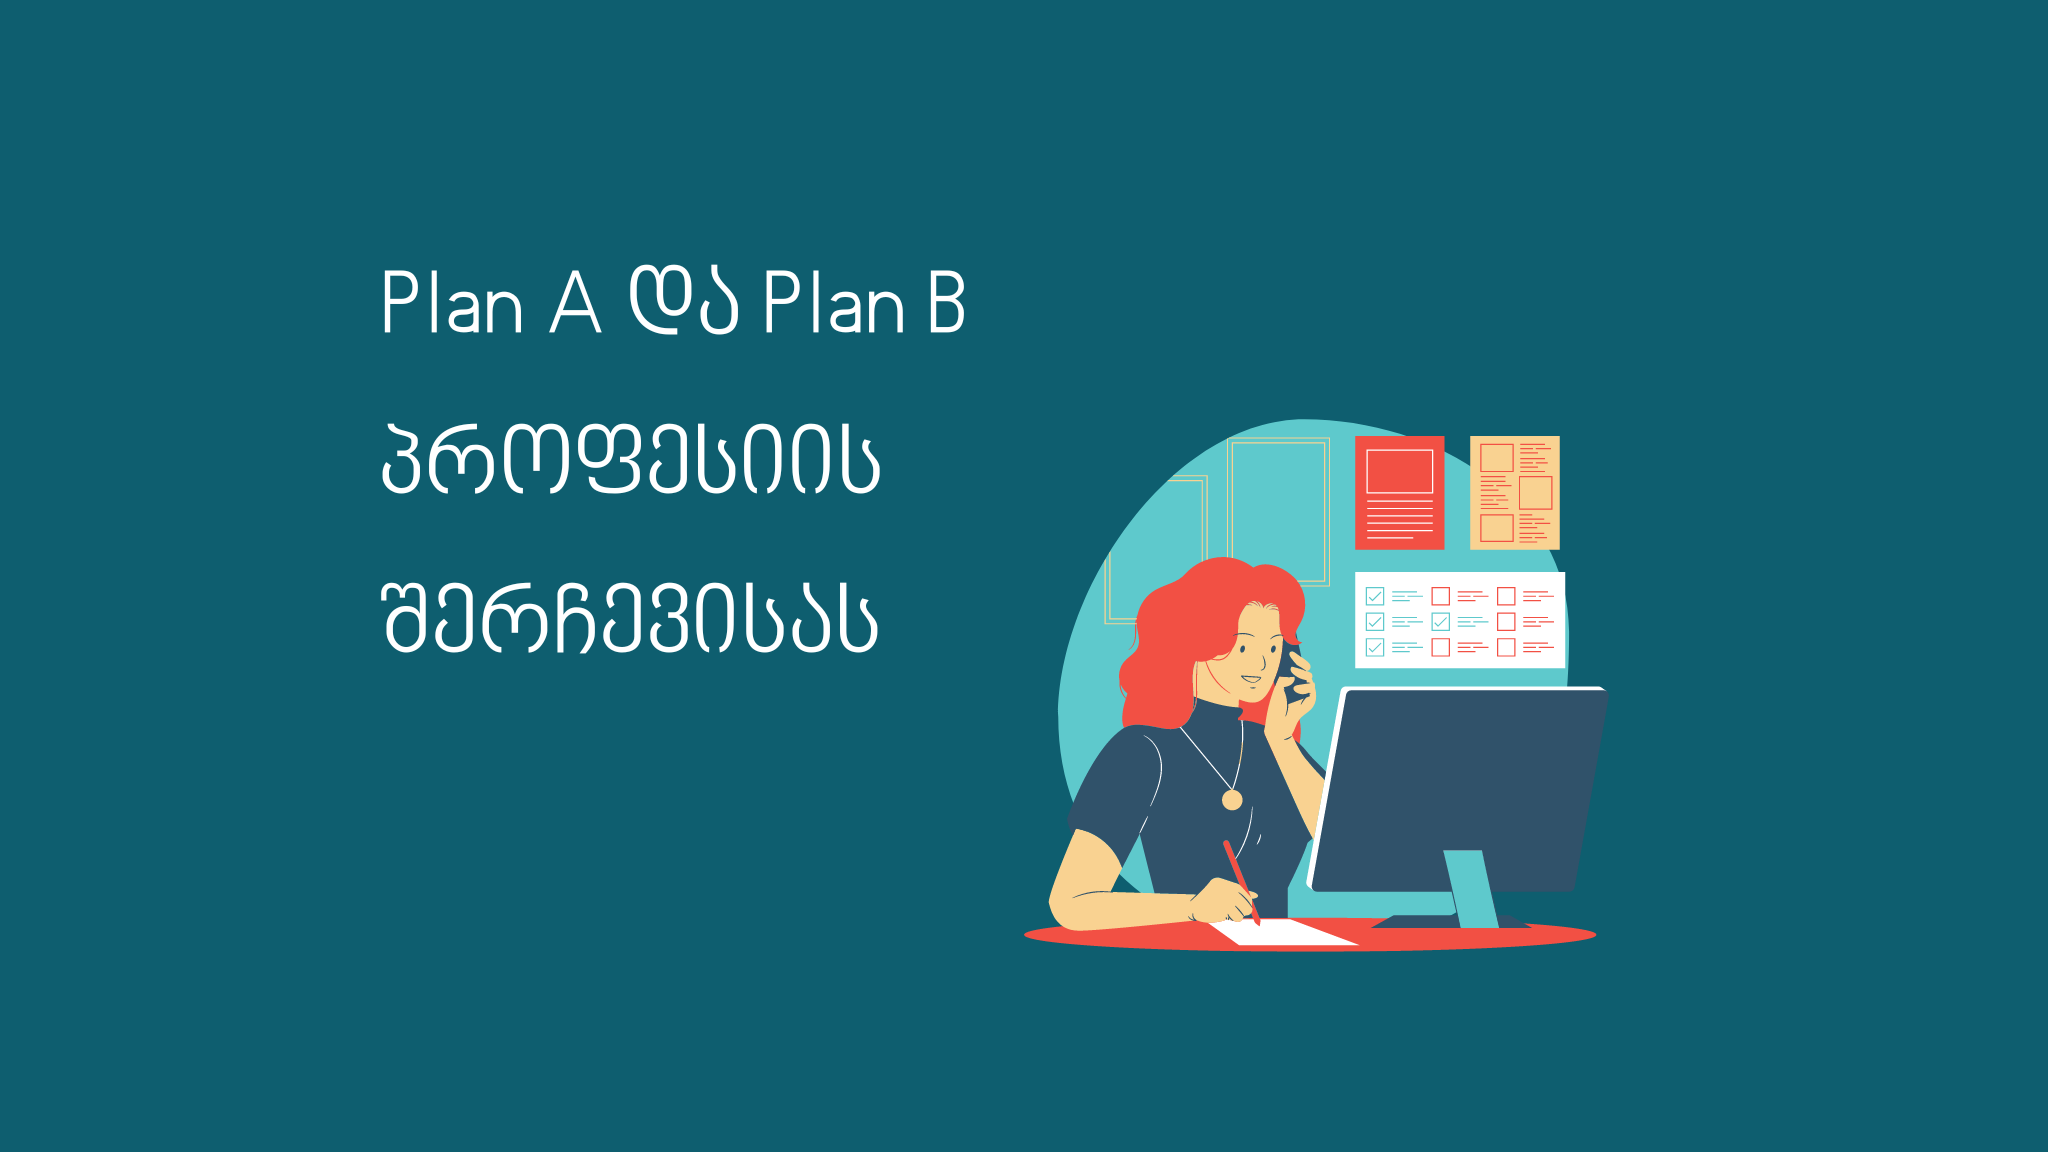 Plan A და Plan B პროფესიის შერჩევისას